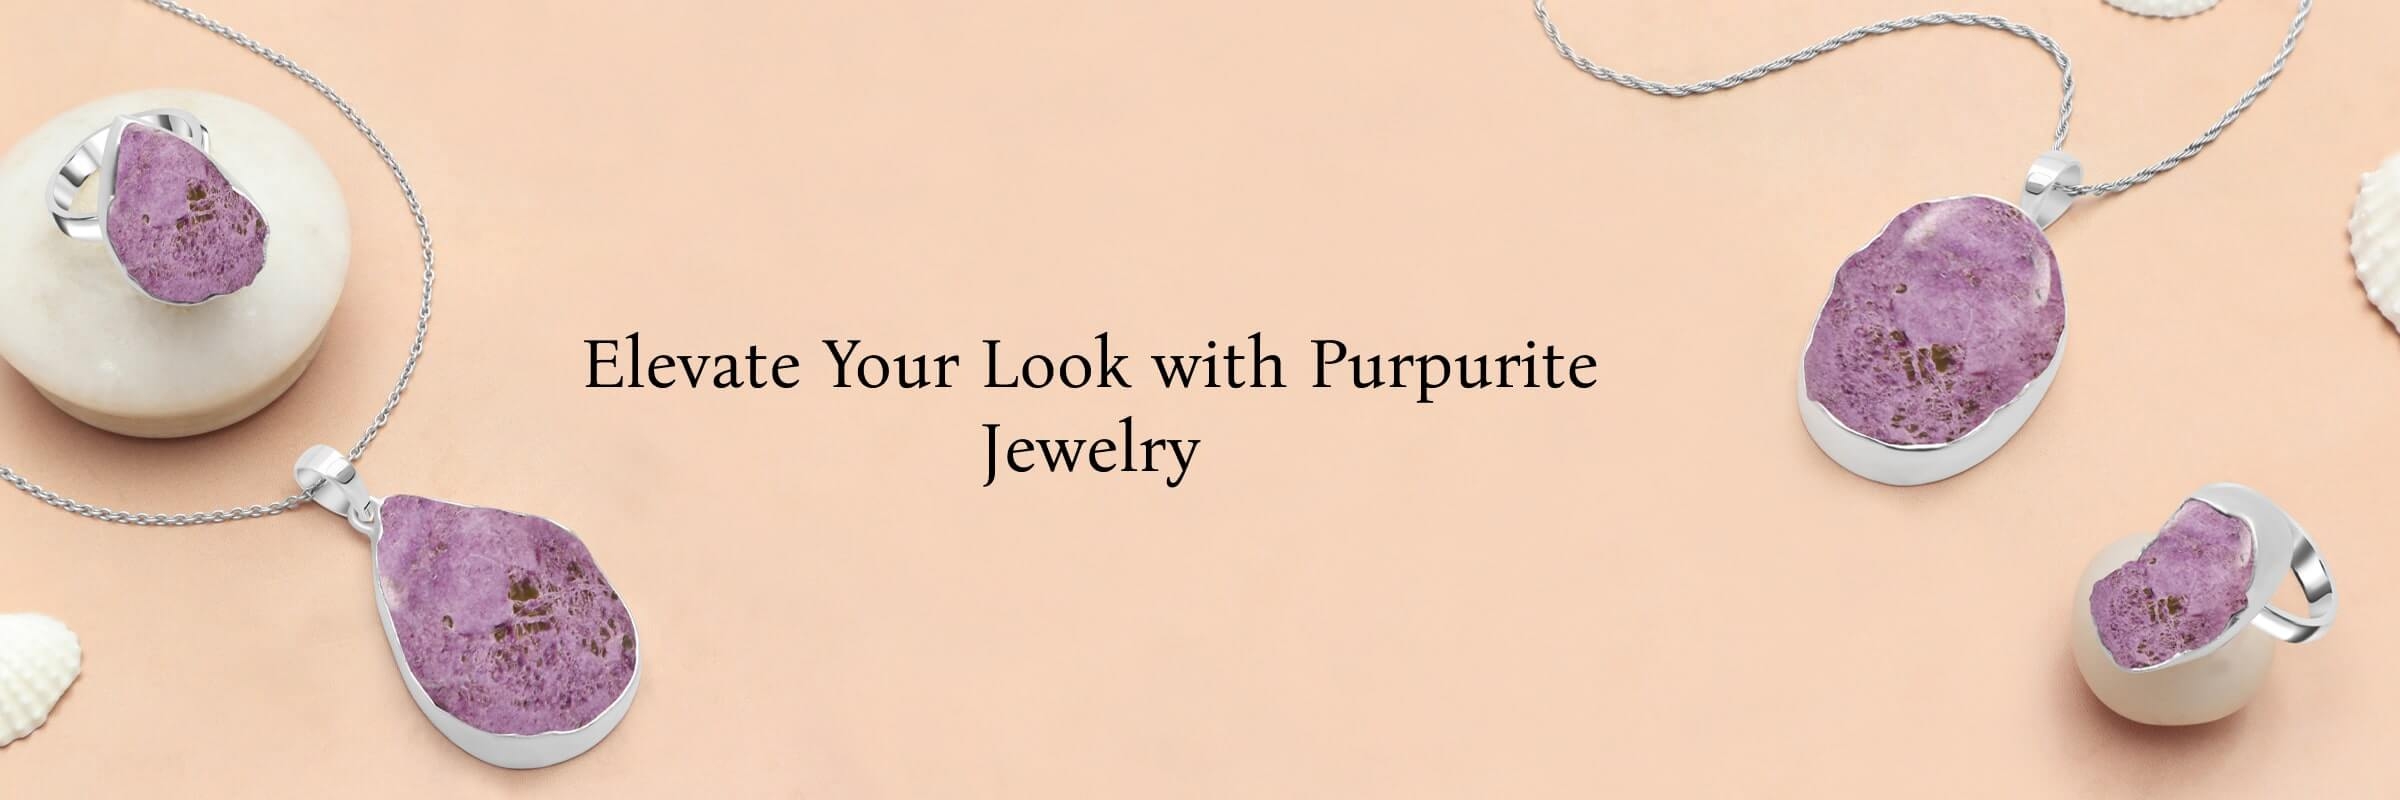 Purpurite Jewelry